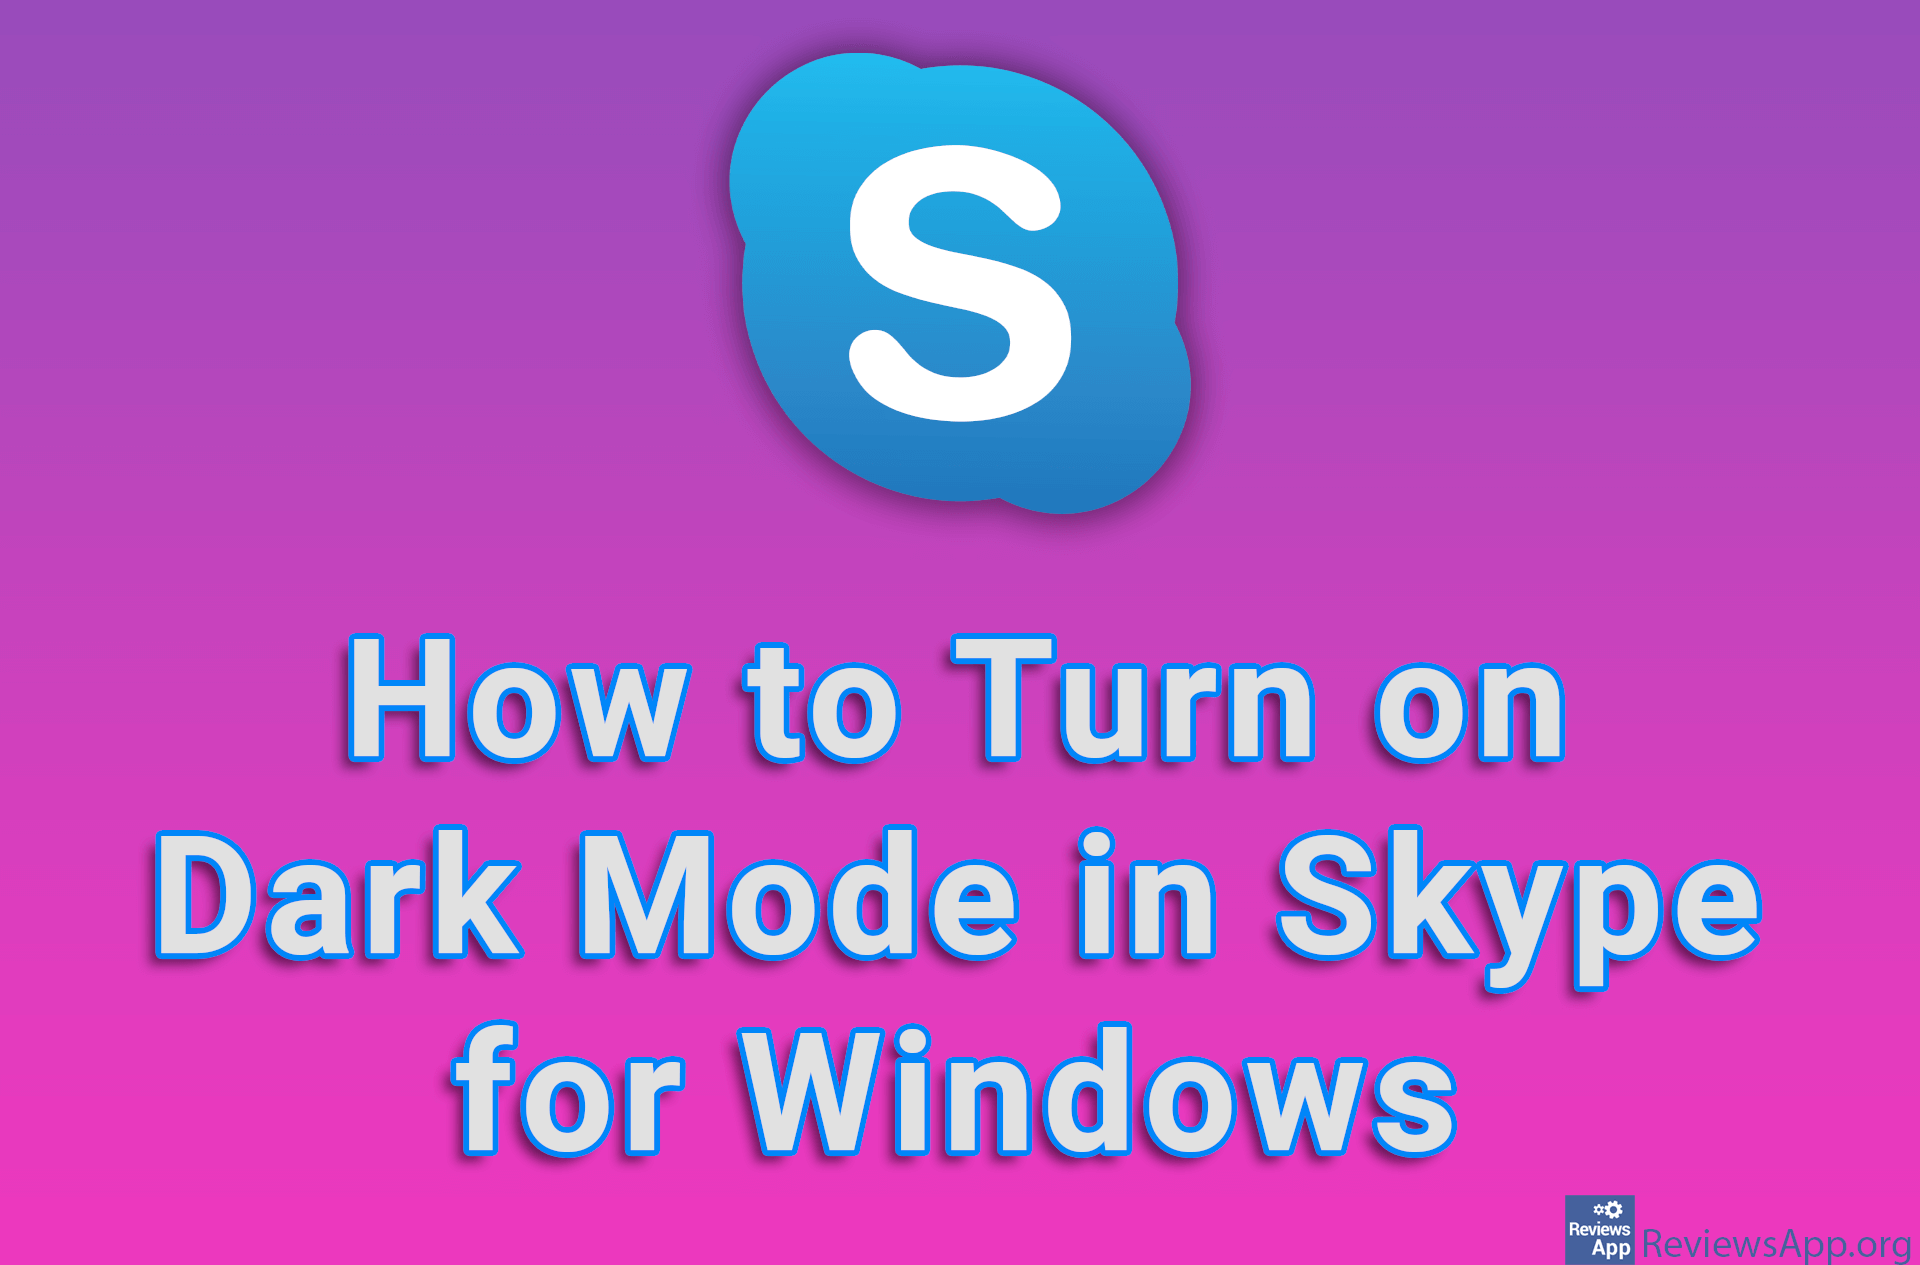 How to Turn on Dark Mode in Skype for Windows